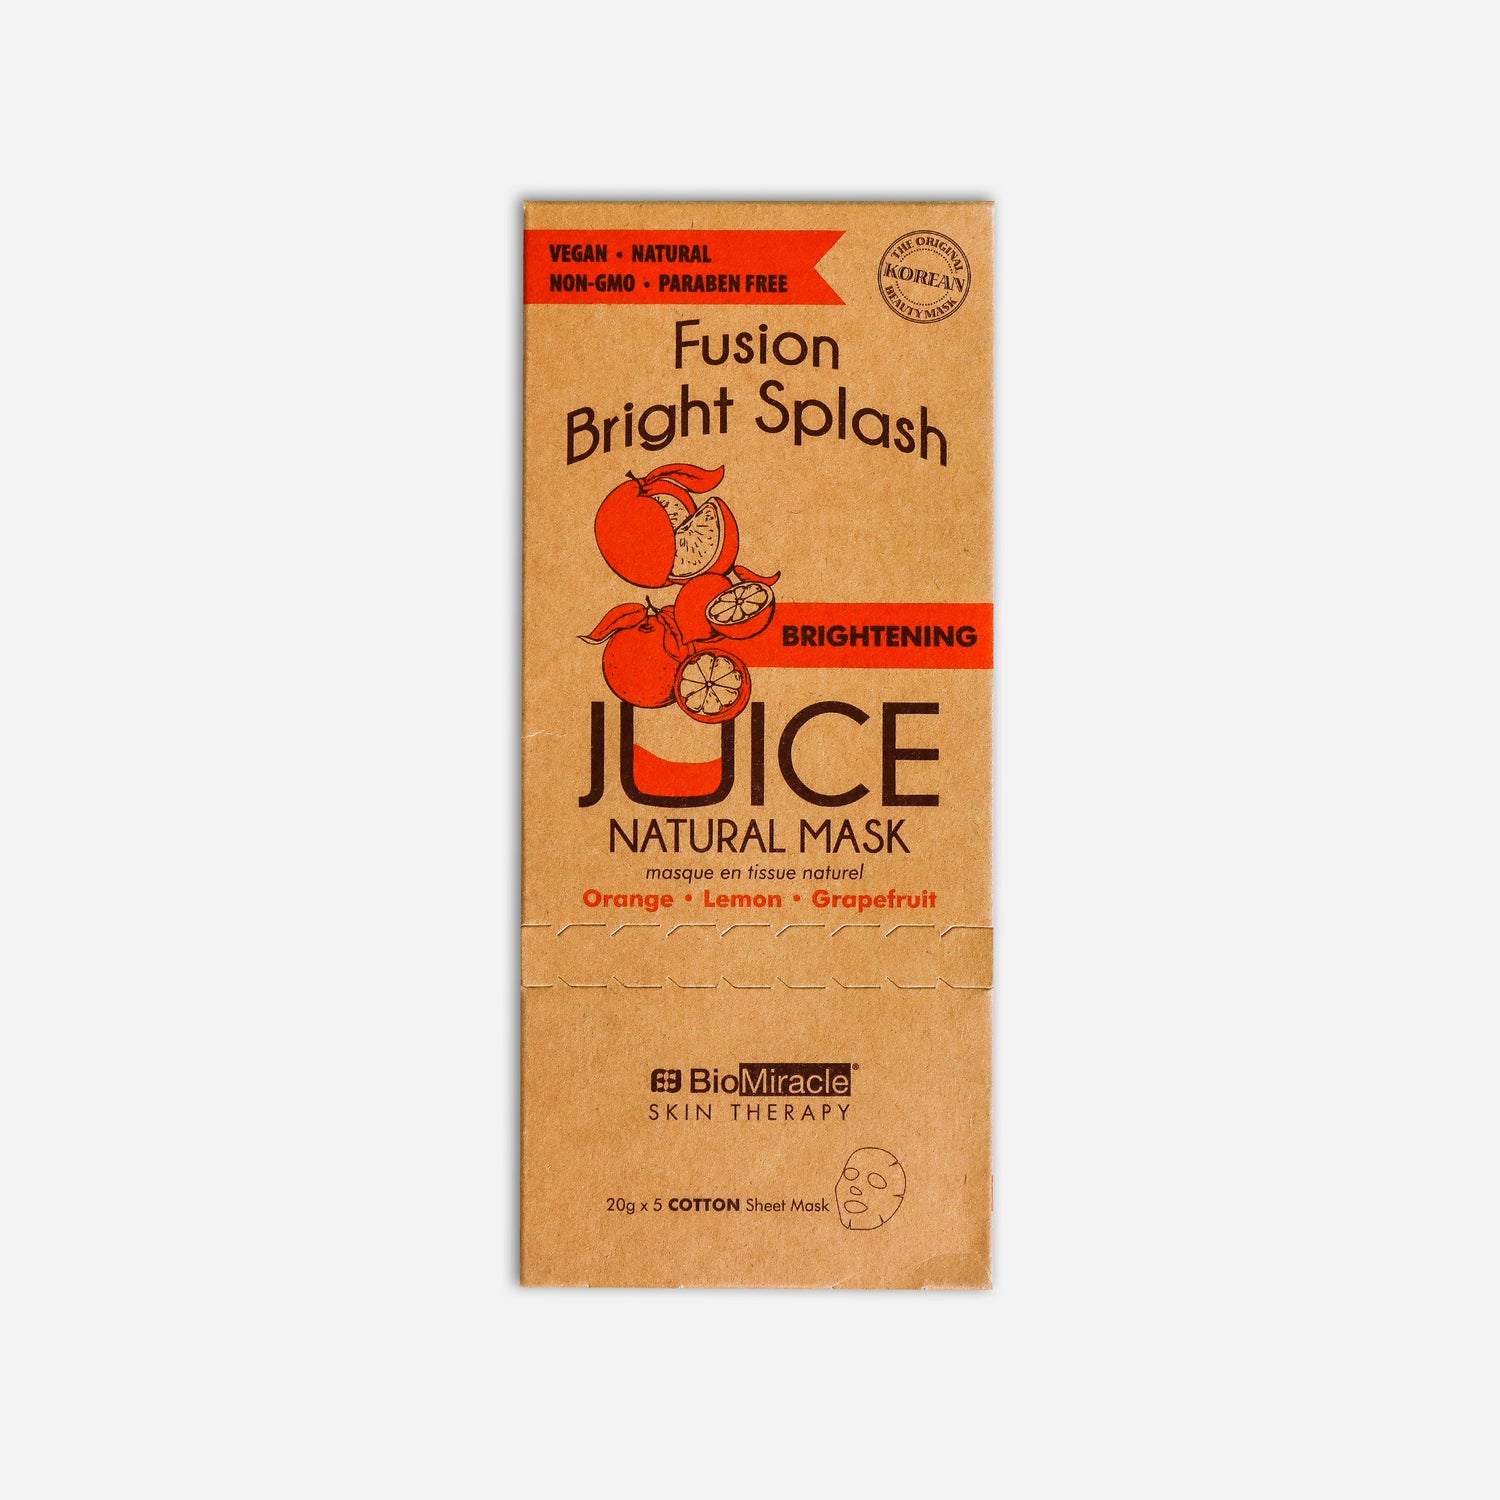 Fusion Bright Splash Brightening Juice Natural Mask 5 Pack